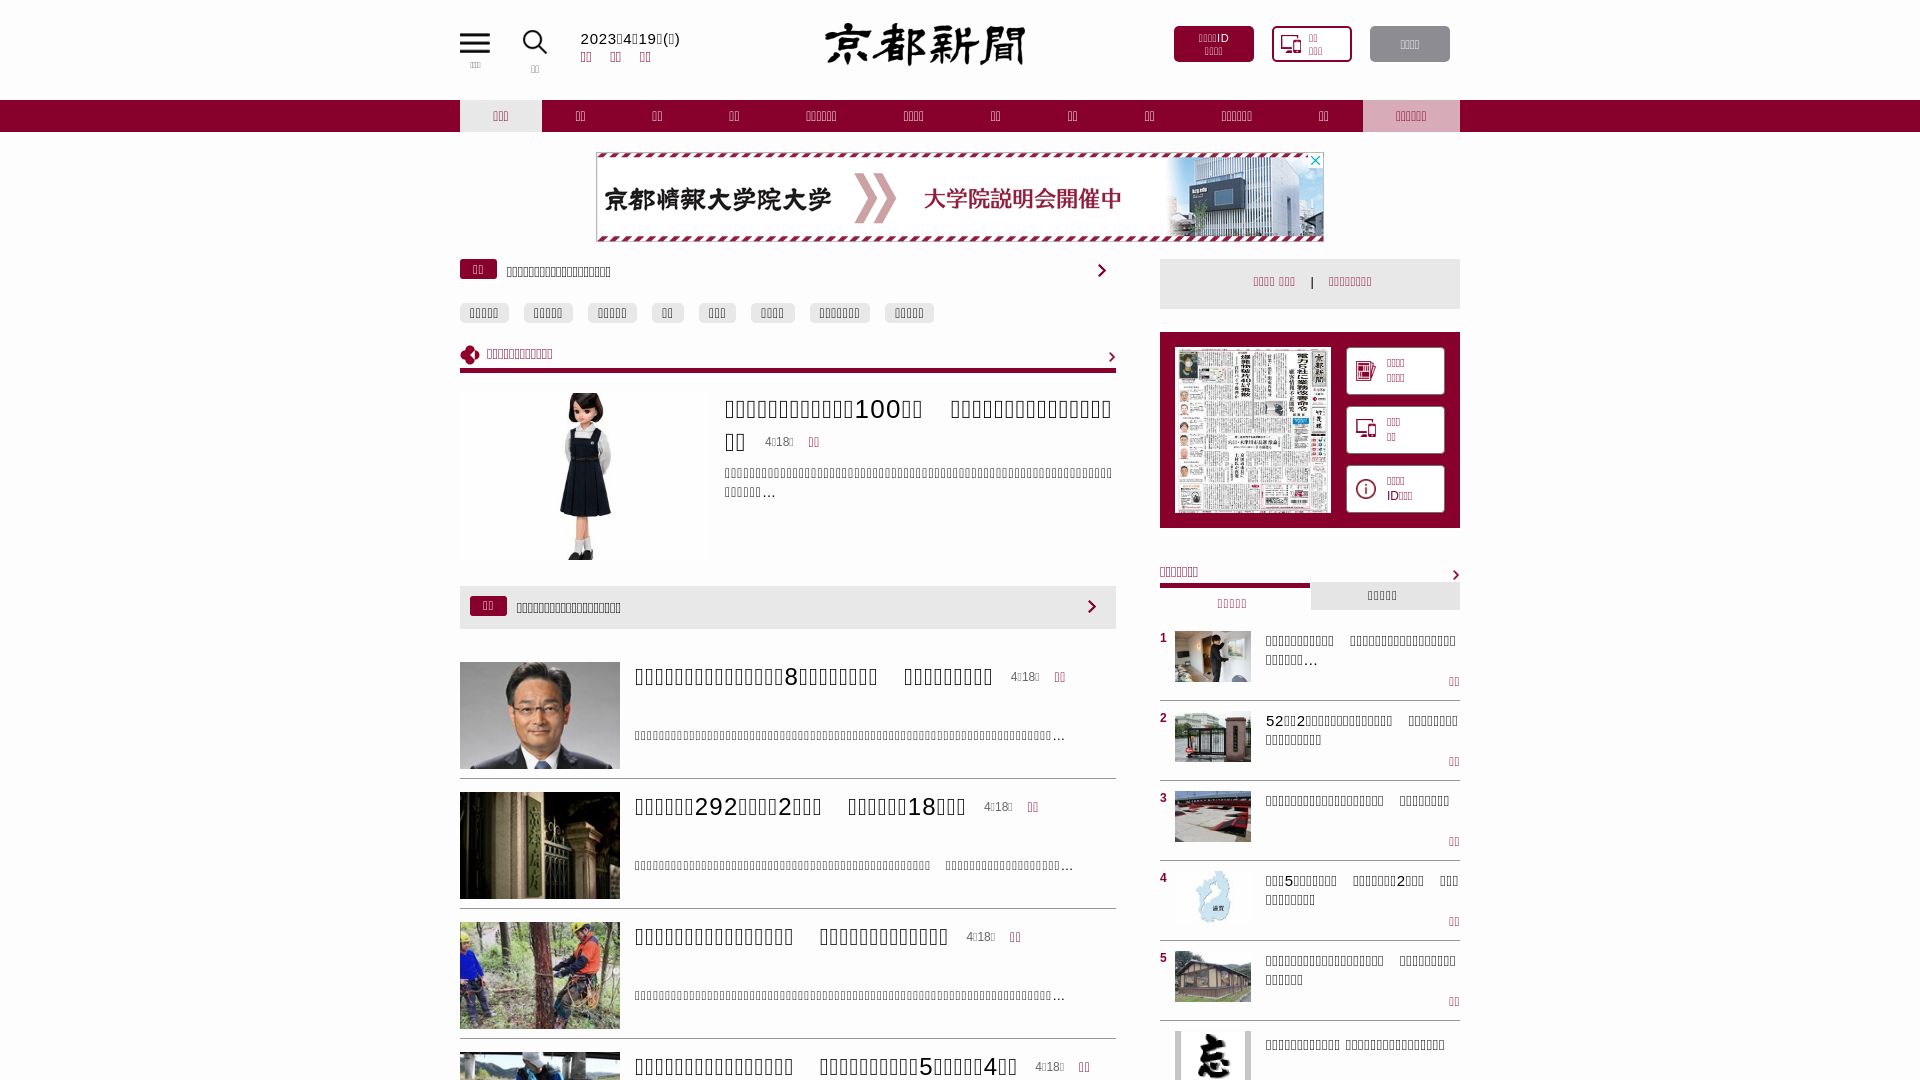 Website status kyoto-np.co.jp is   ONLINE